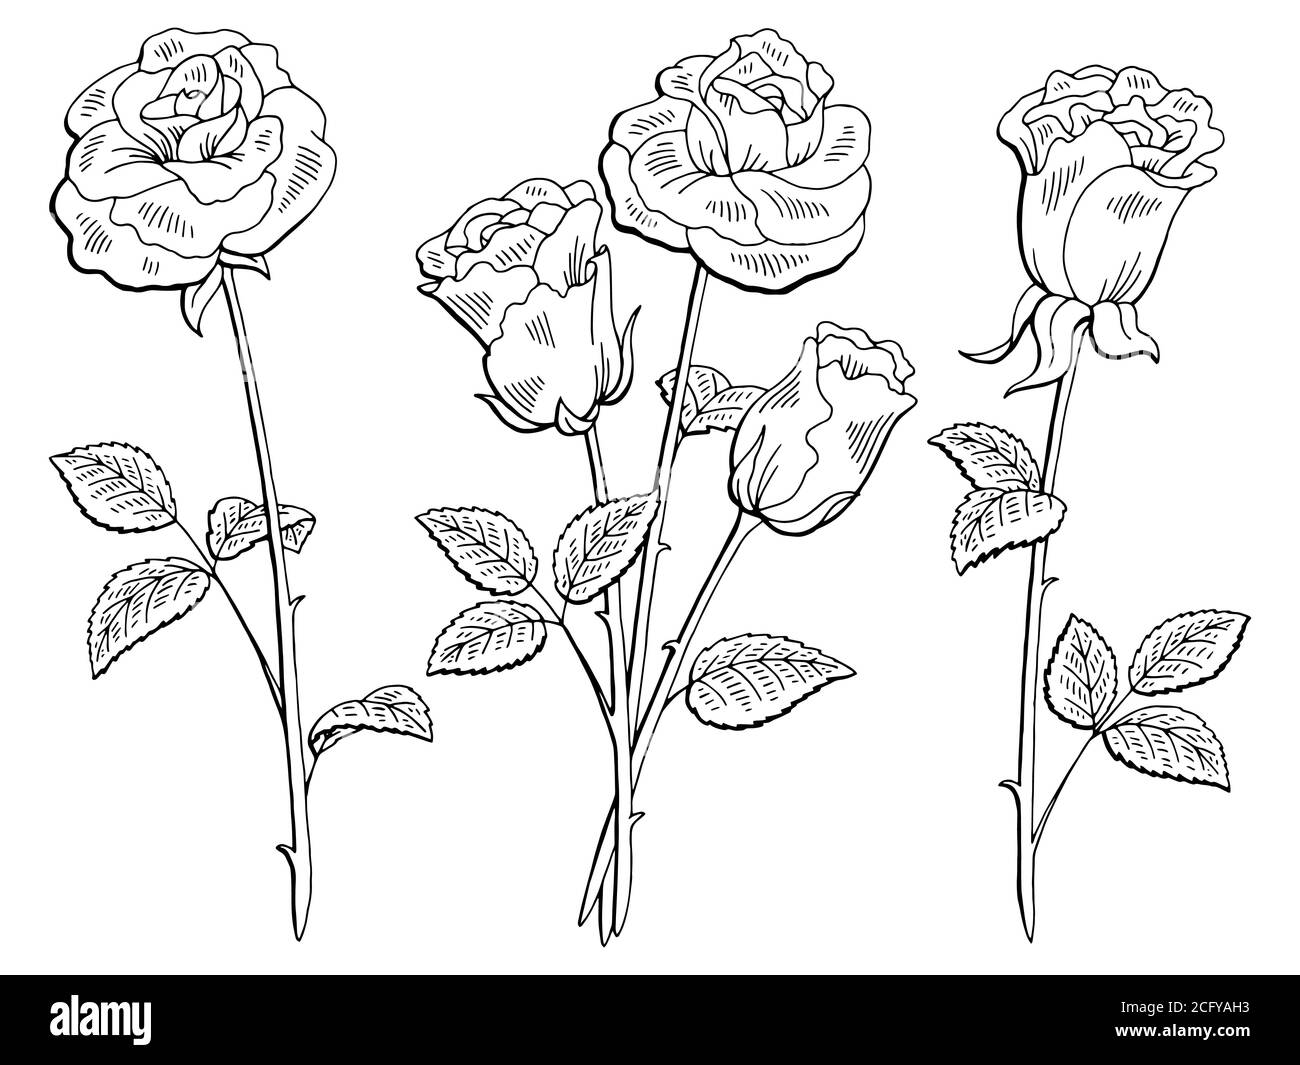 Rose Blume Grafik schwarz weiß isoliert Skizze Illustration Vektor  Stock-Vektorgrafik - Alamy